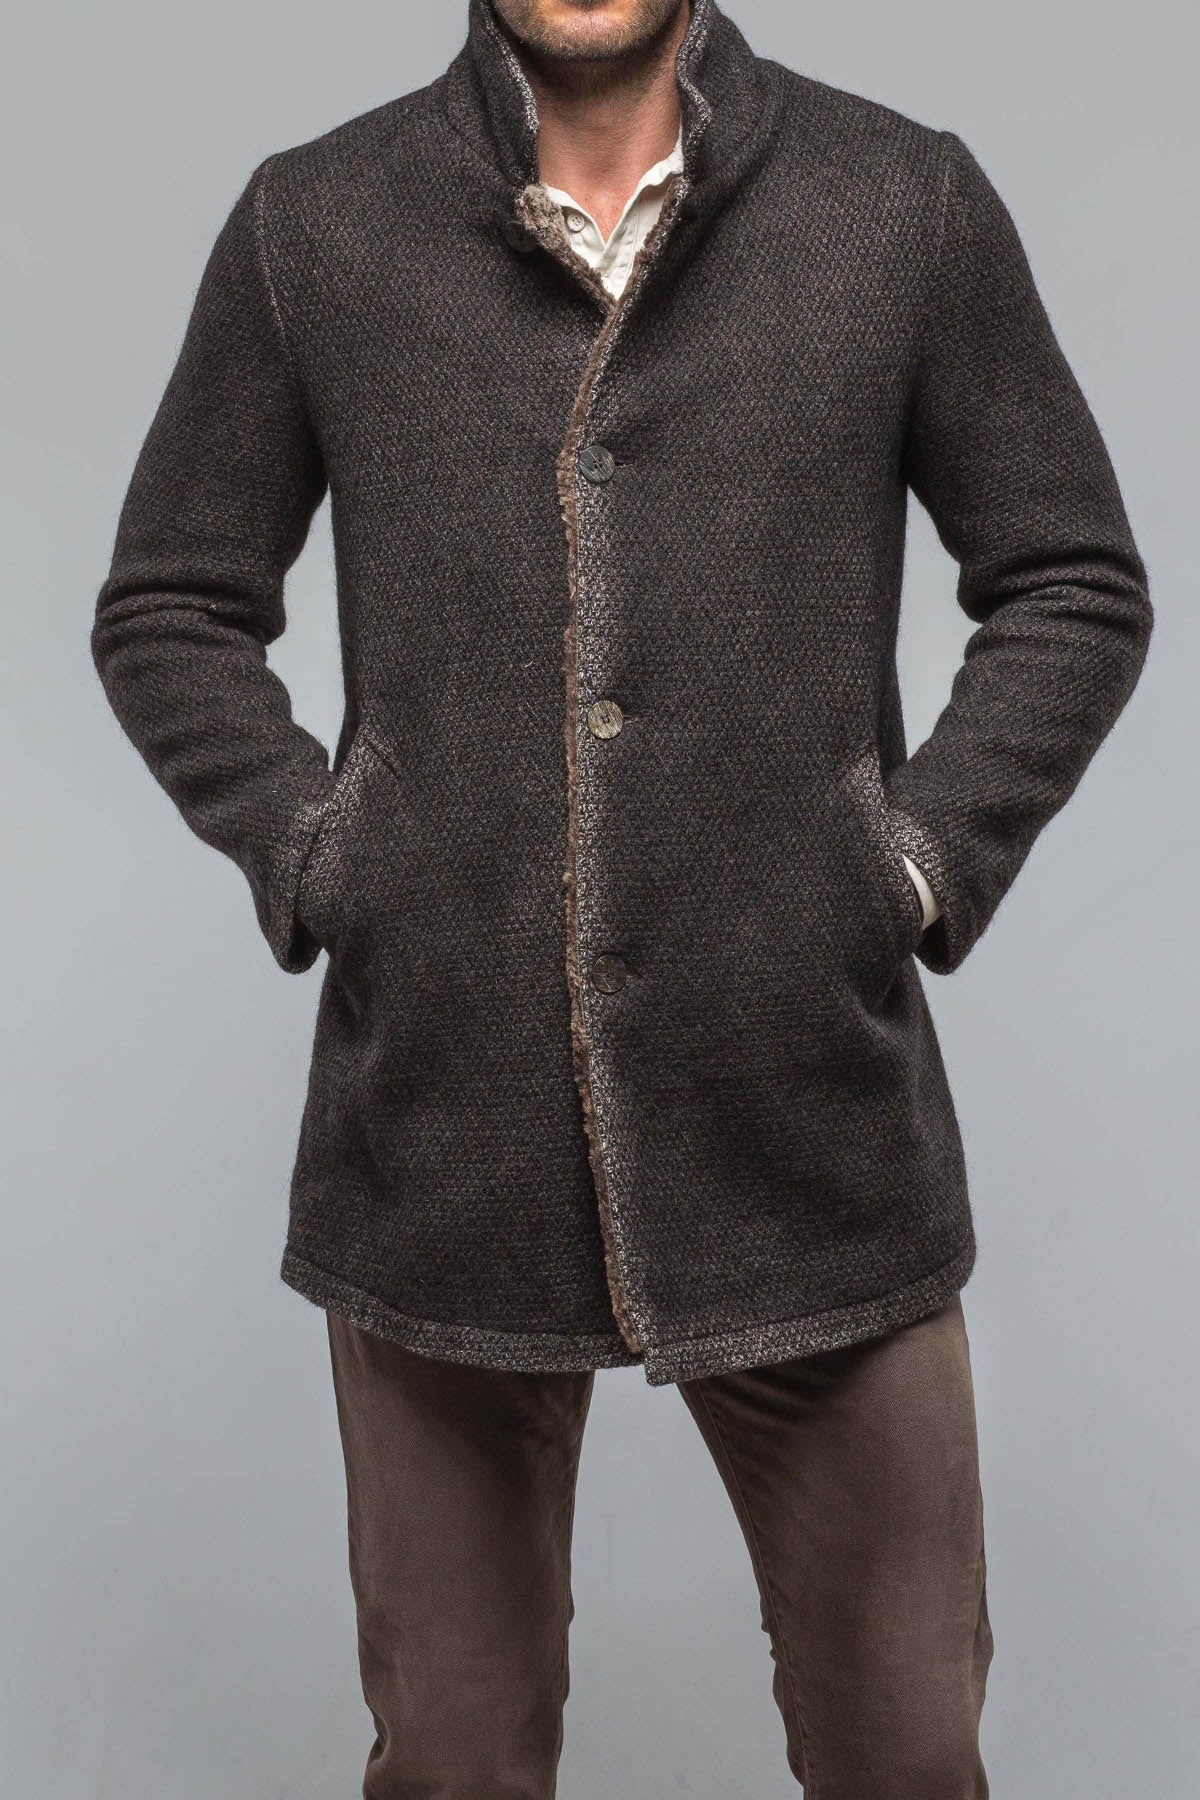 Maybank Knit Jacket | Mens - Outerwear - Cloth | Gimo's